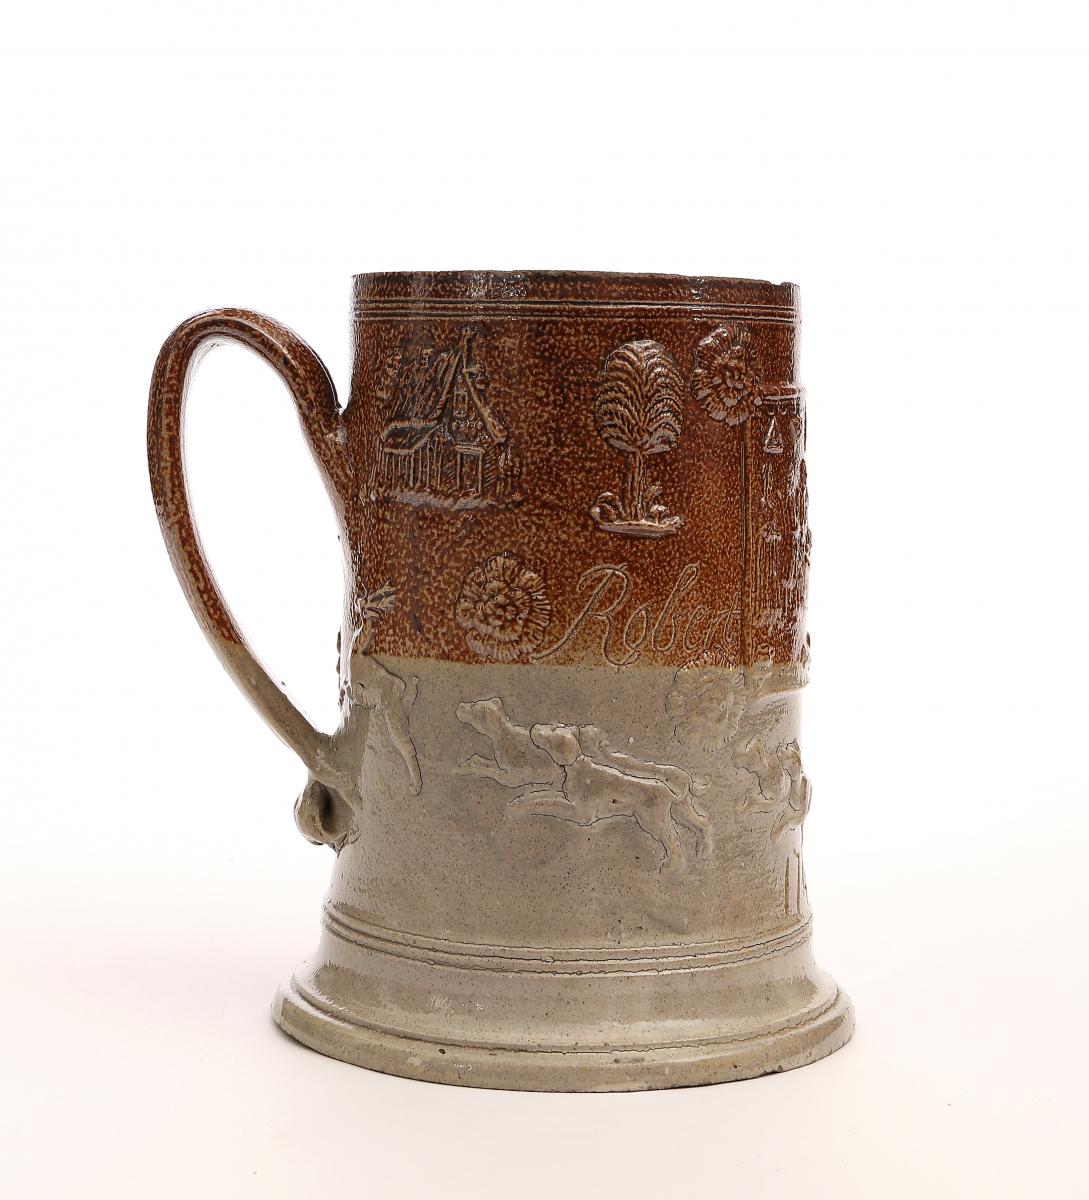 A Dated English Stoneware Tankard